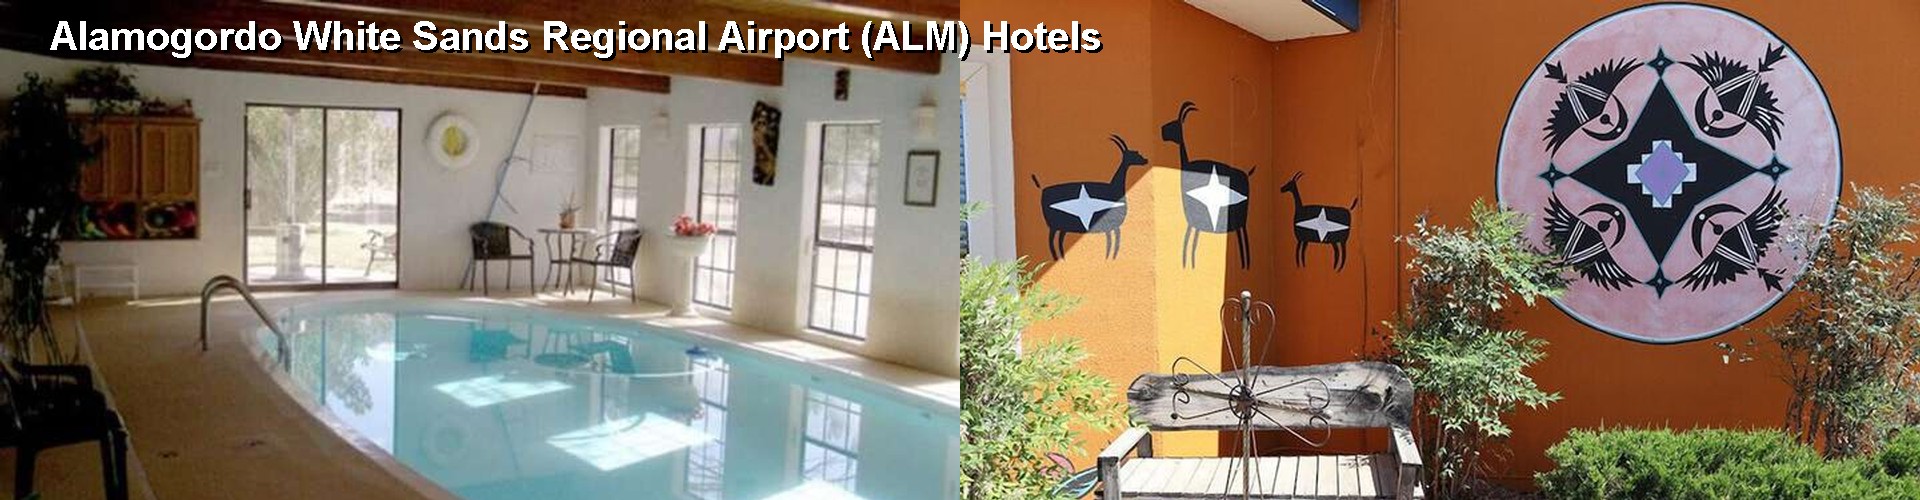 5 Best Hotels near Alamogordo White Sands Regional Airport (ALM)